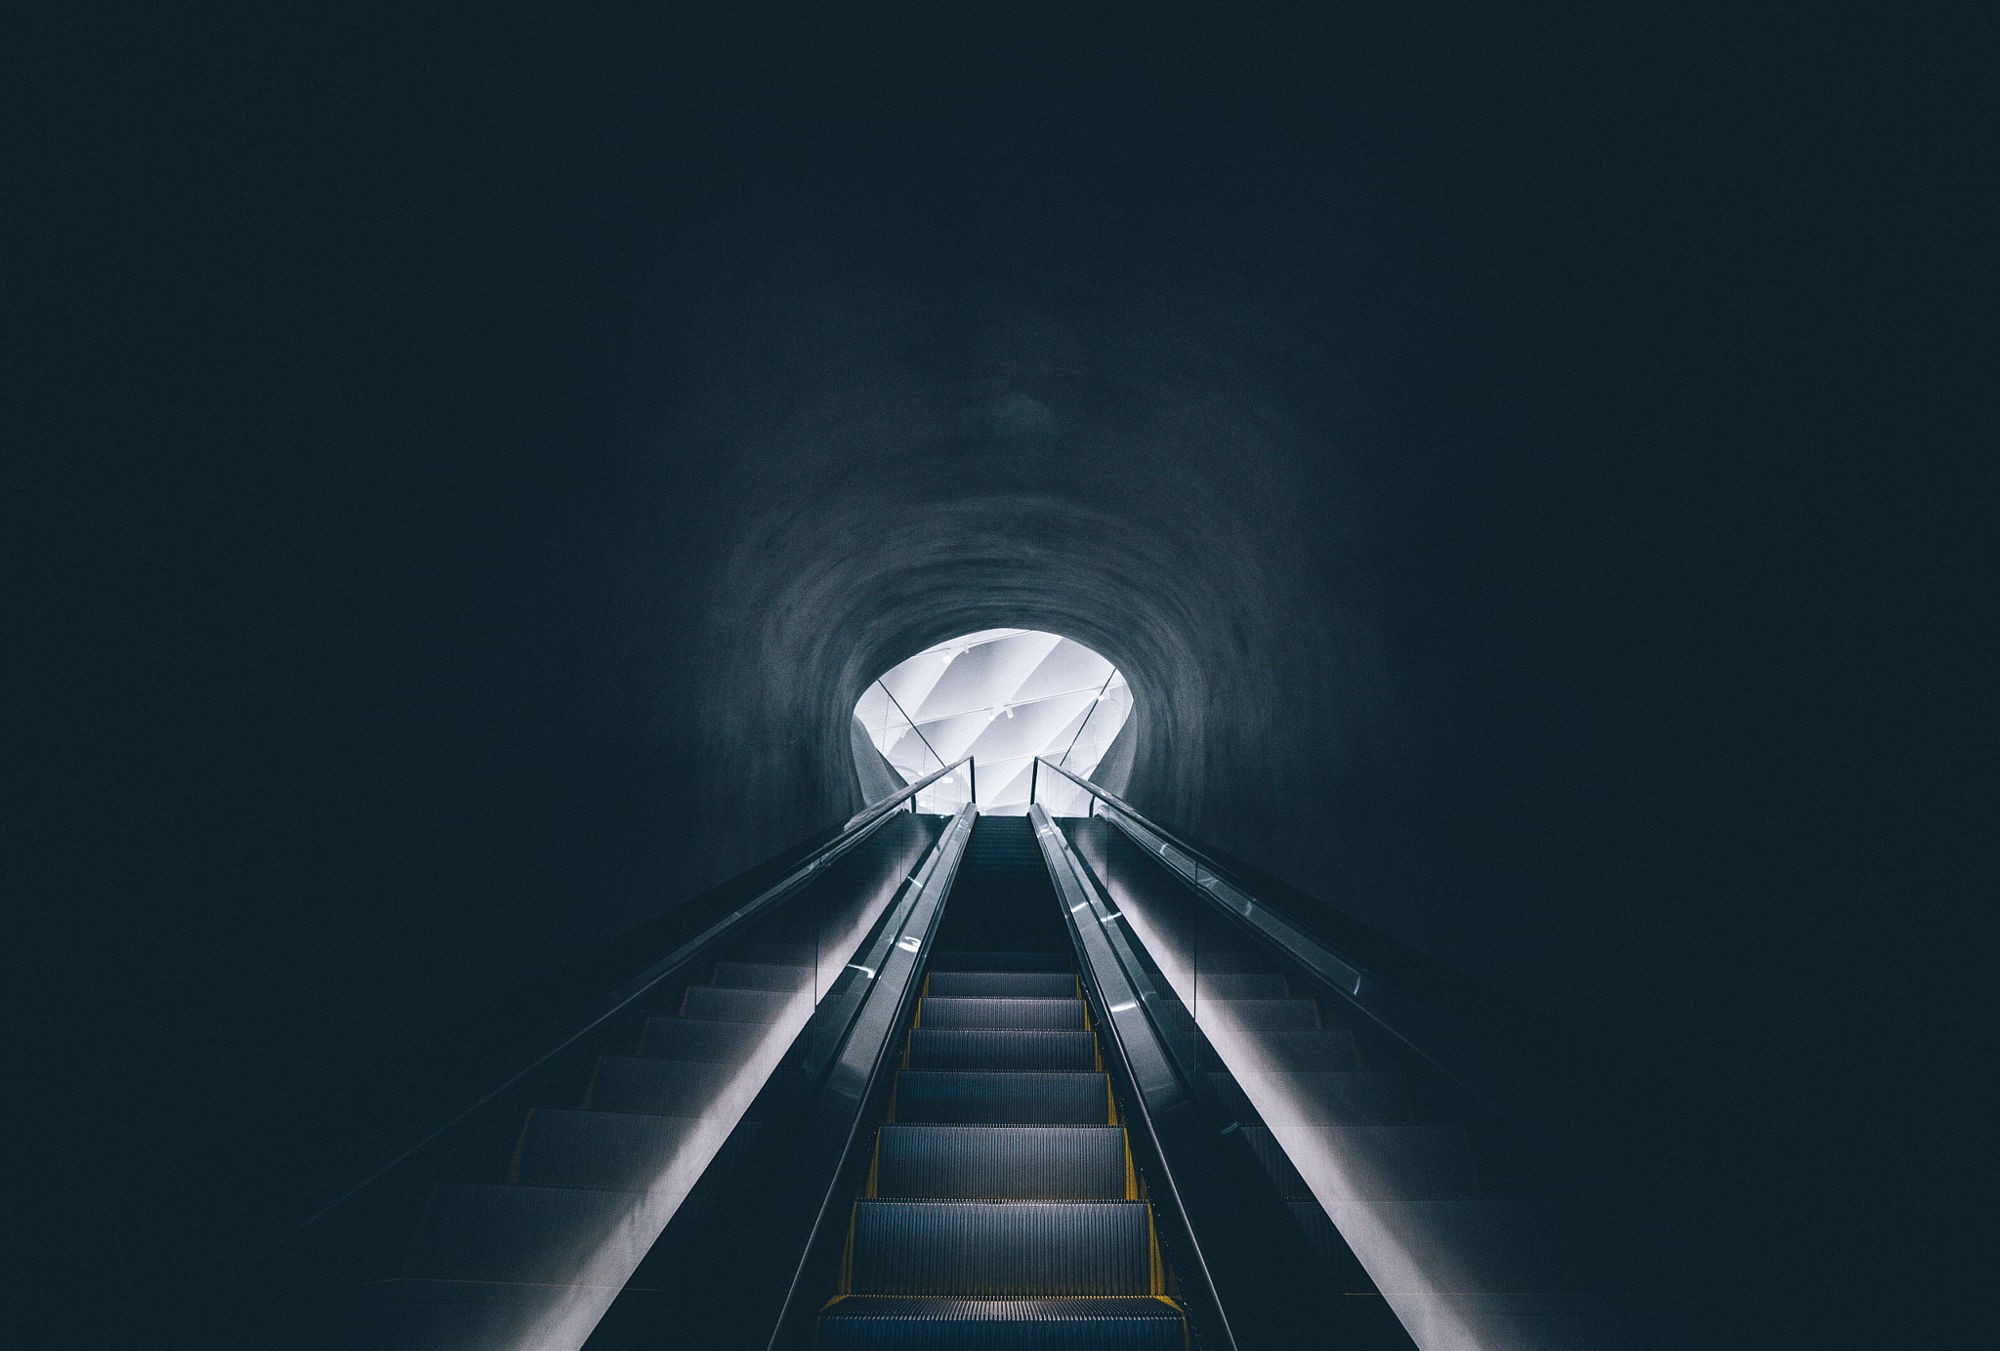 General 2000x1351 escalator vignette Los Angeles museum symmetry tunnel dark